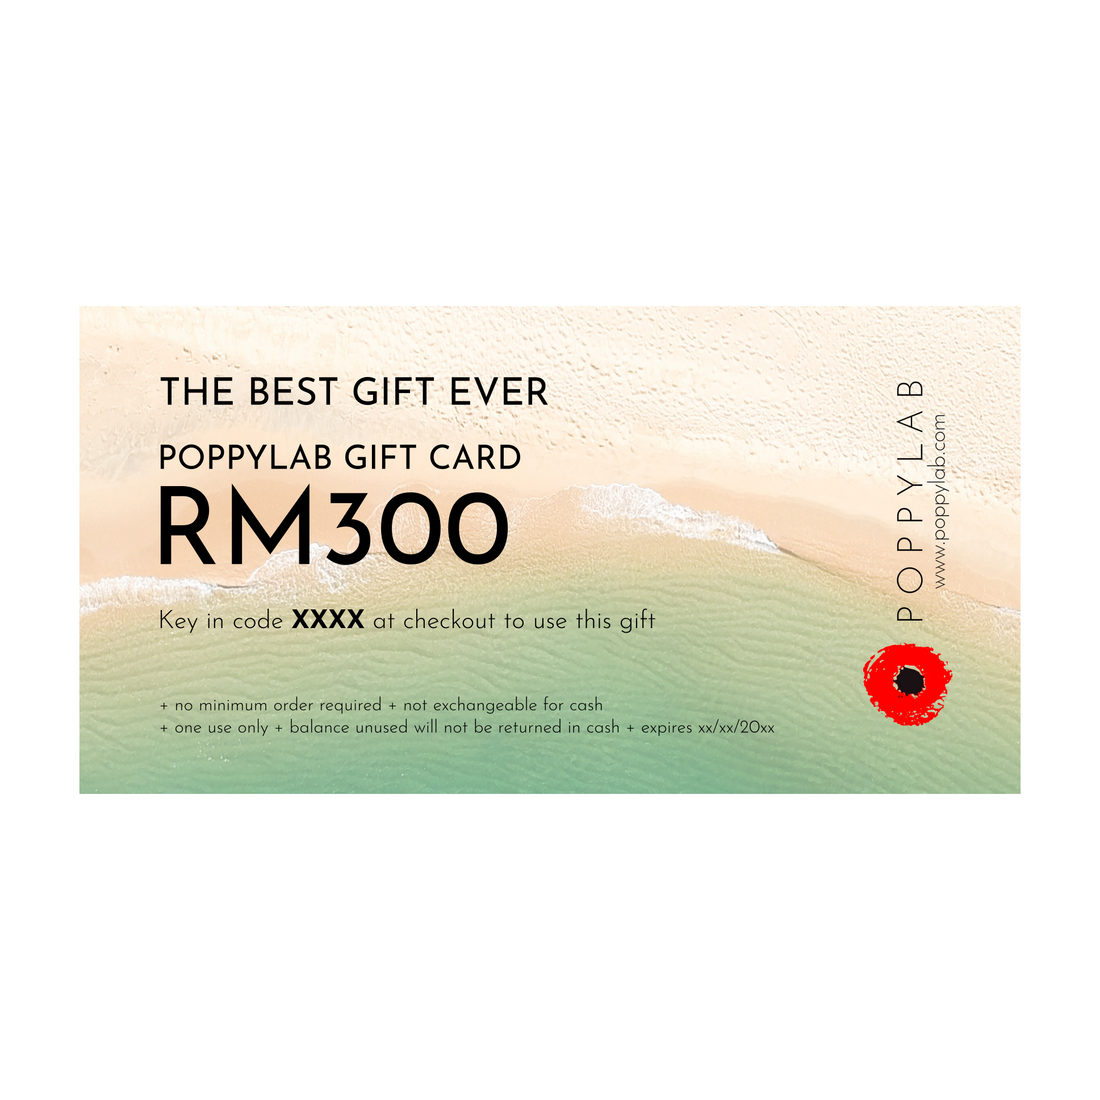 GIFT CARD: RM300